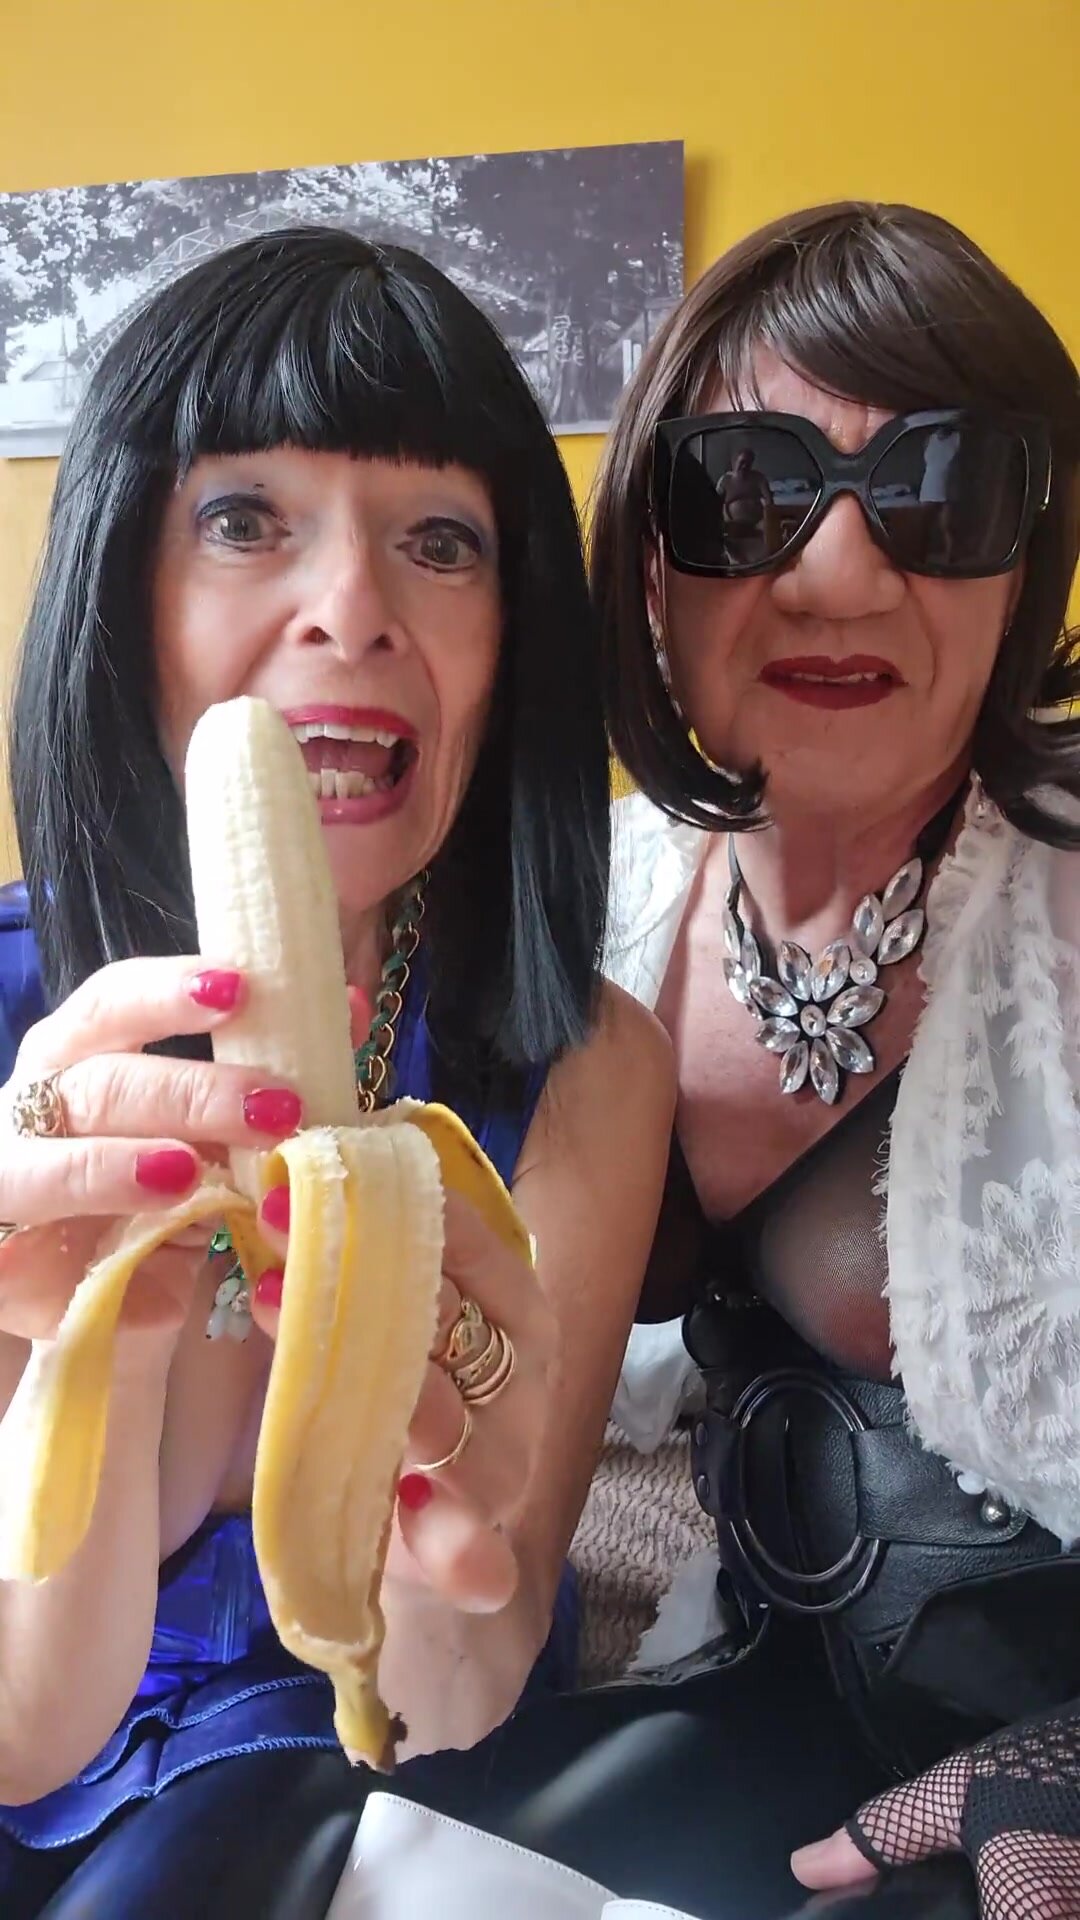 Female and shemale eating banana